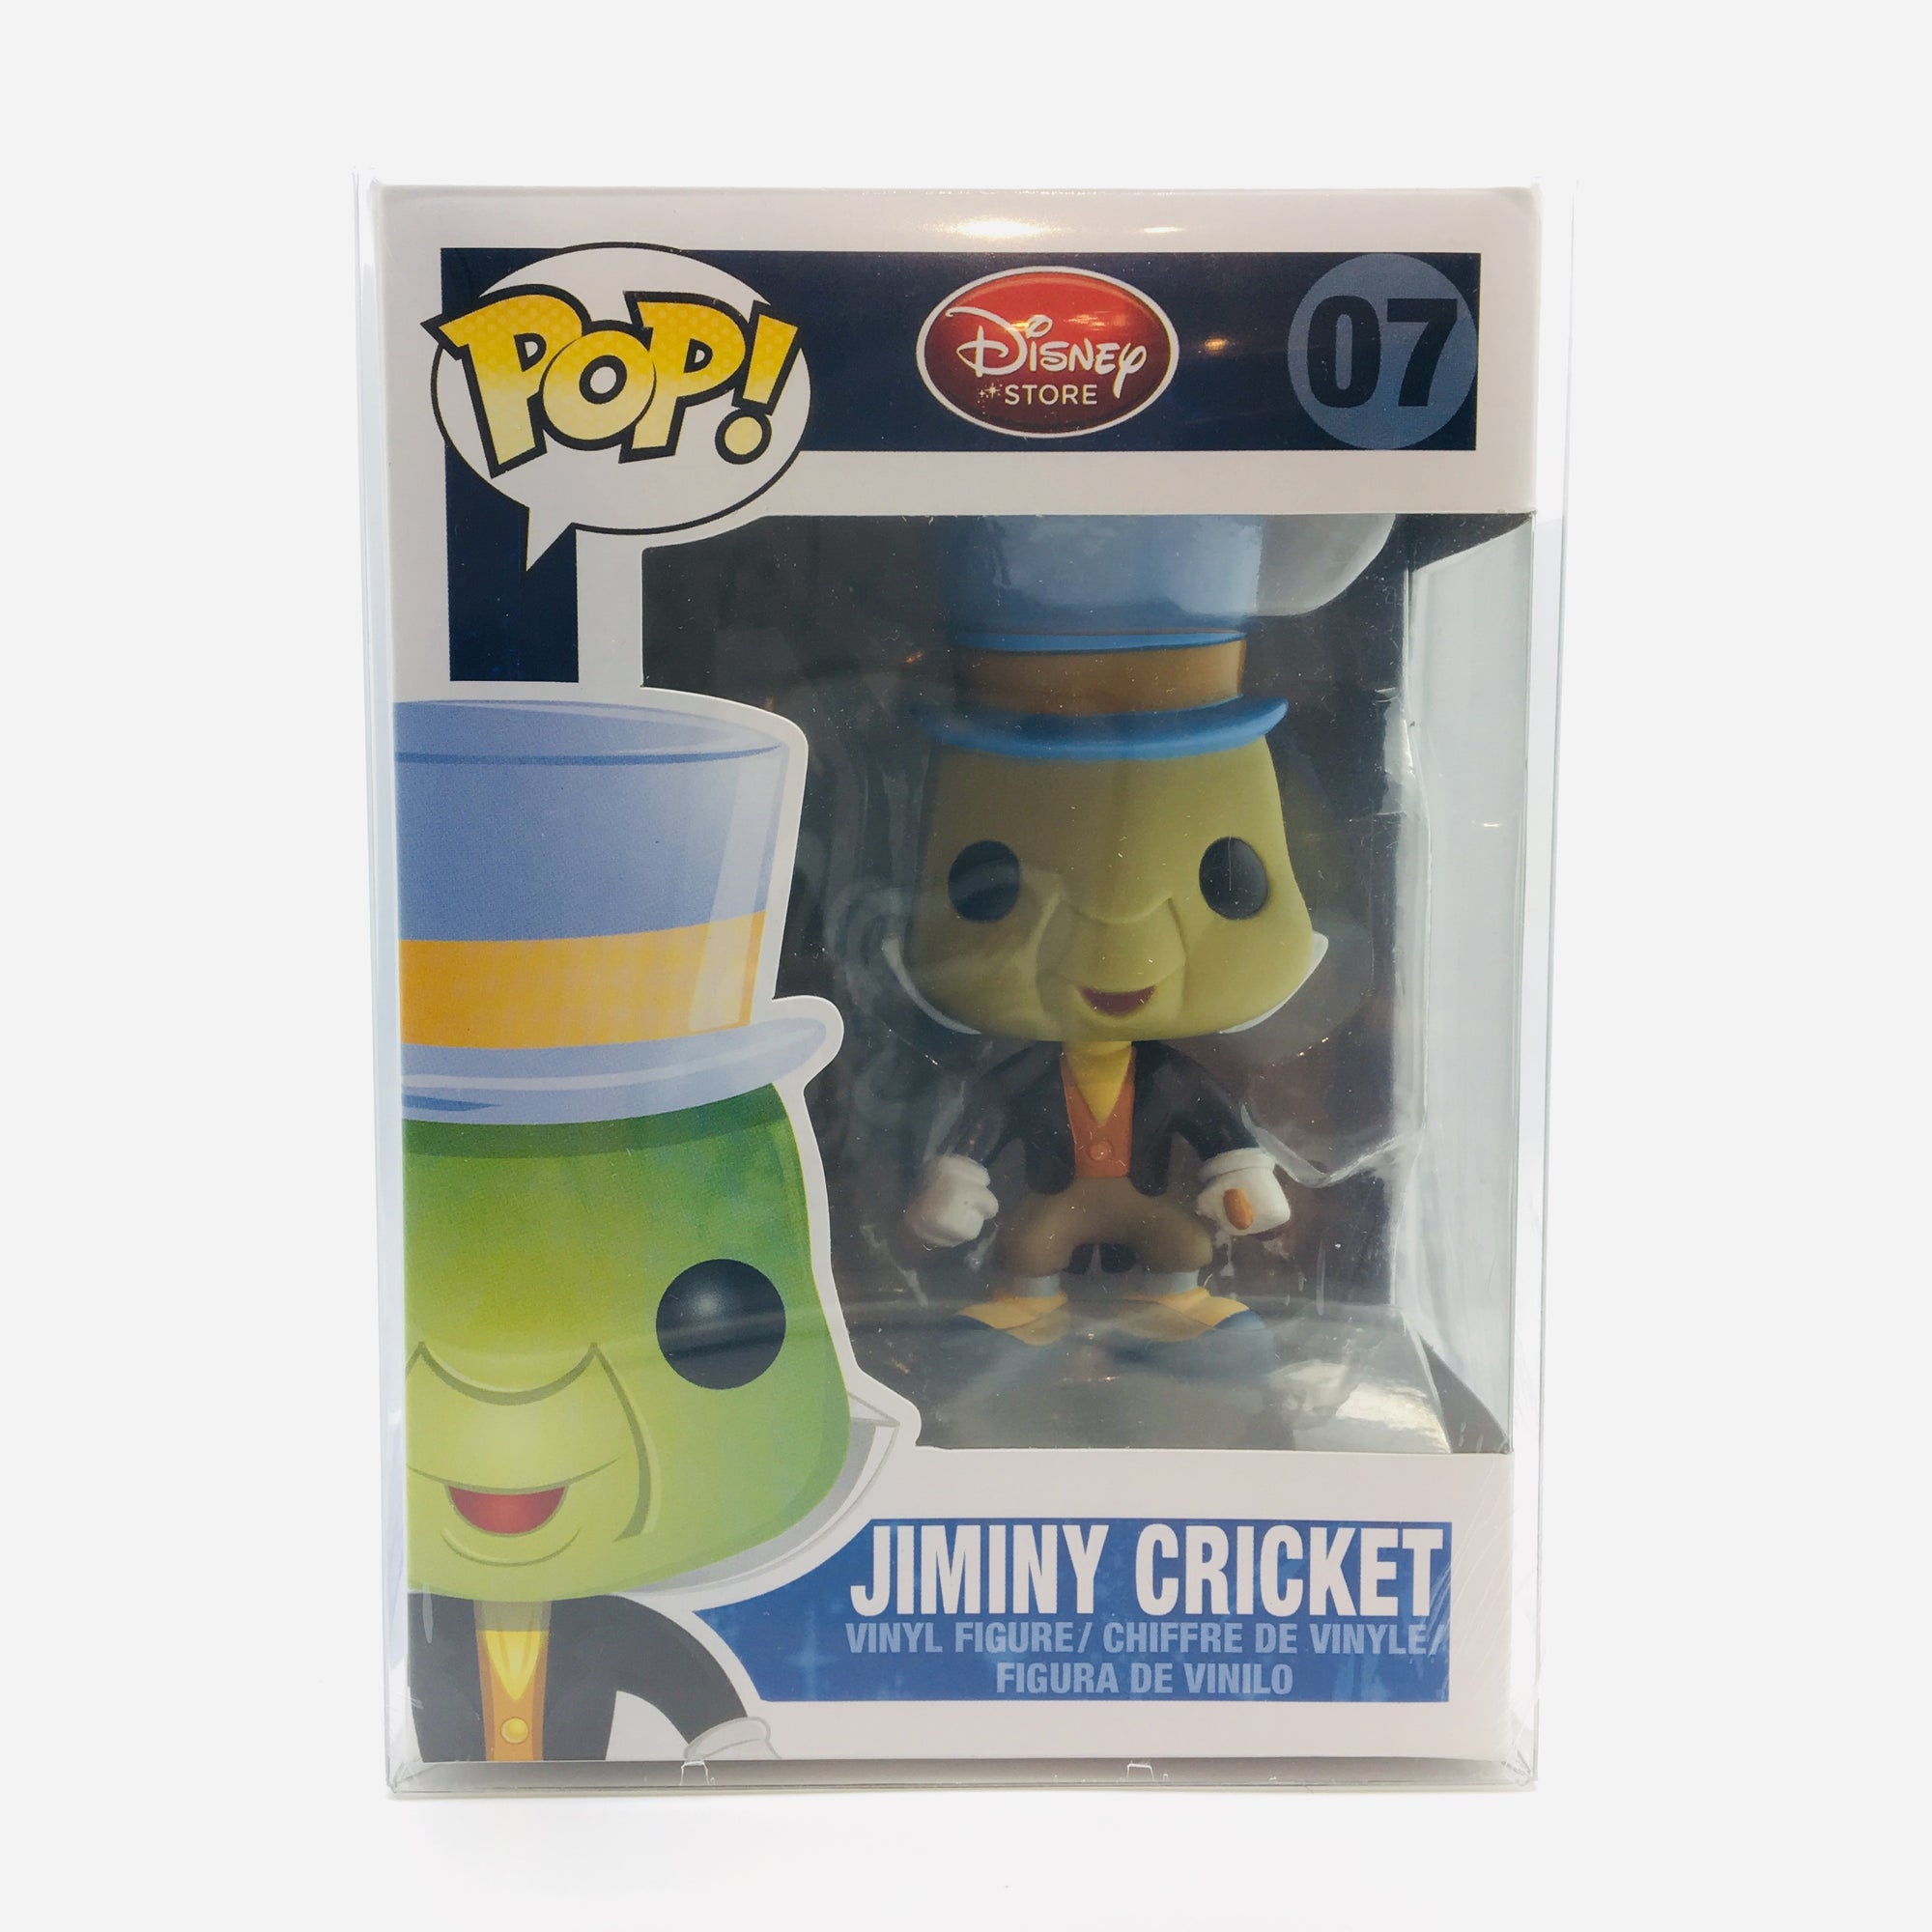 Disney Jiminy Cricket Pop Toy Figure #07 Vaulted by Funko